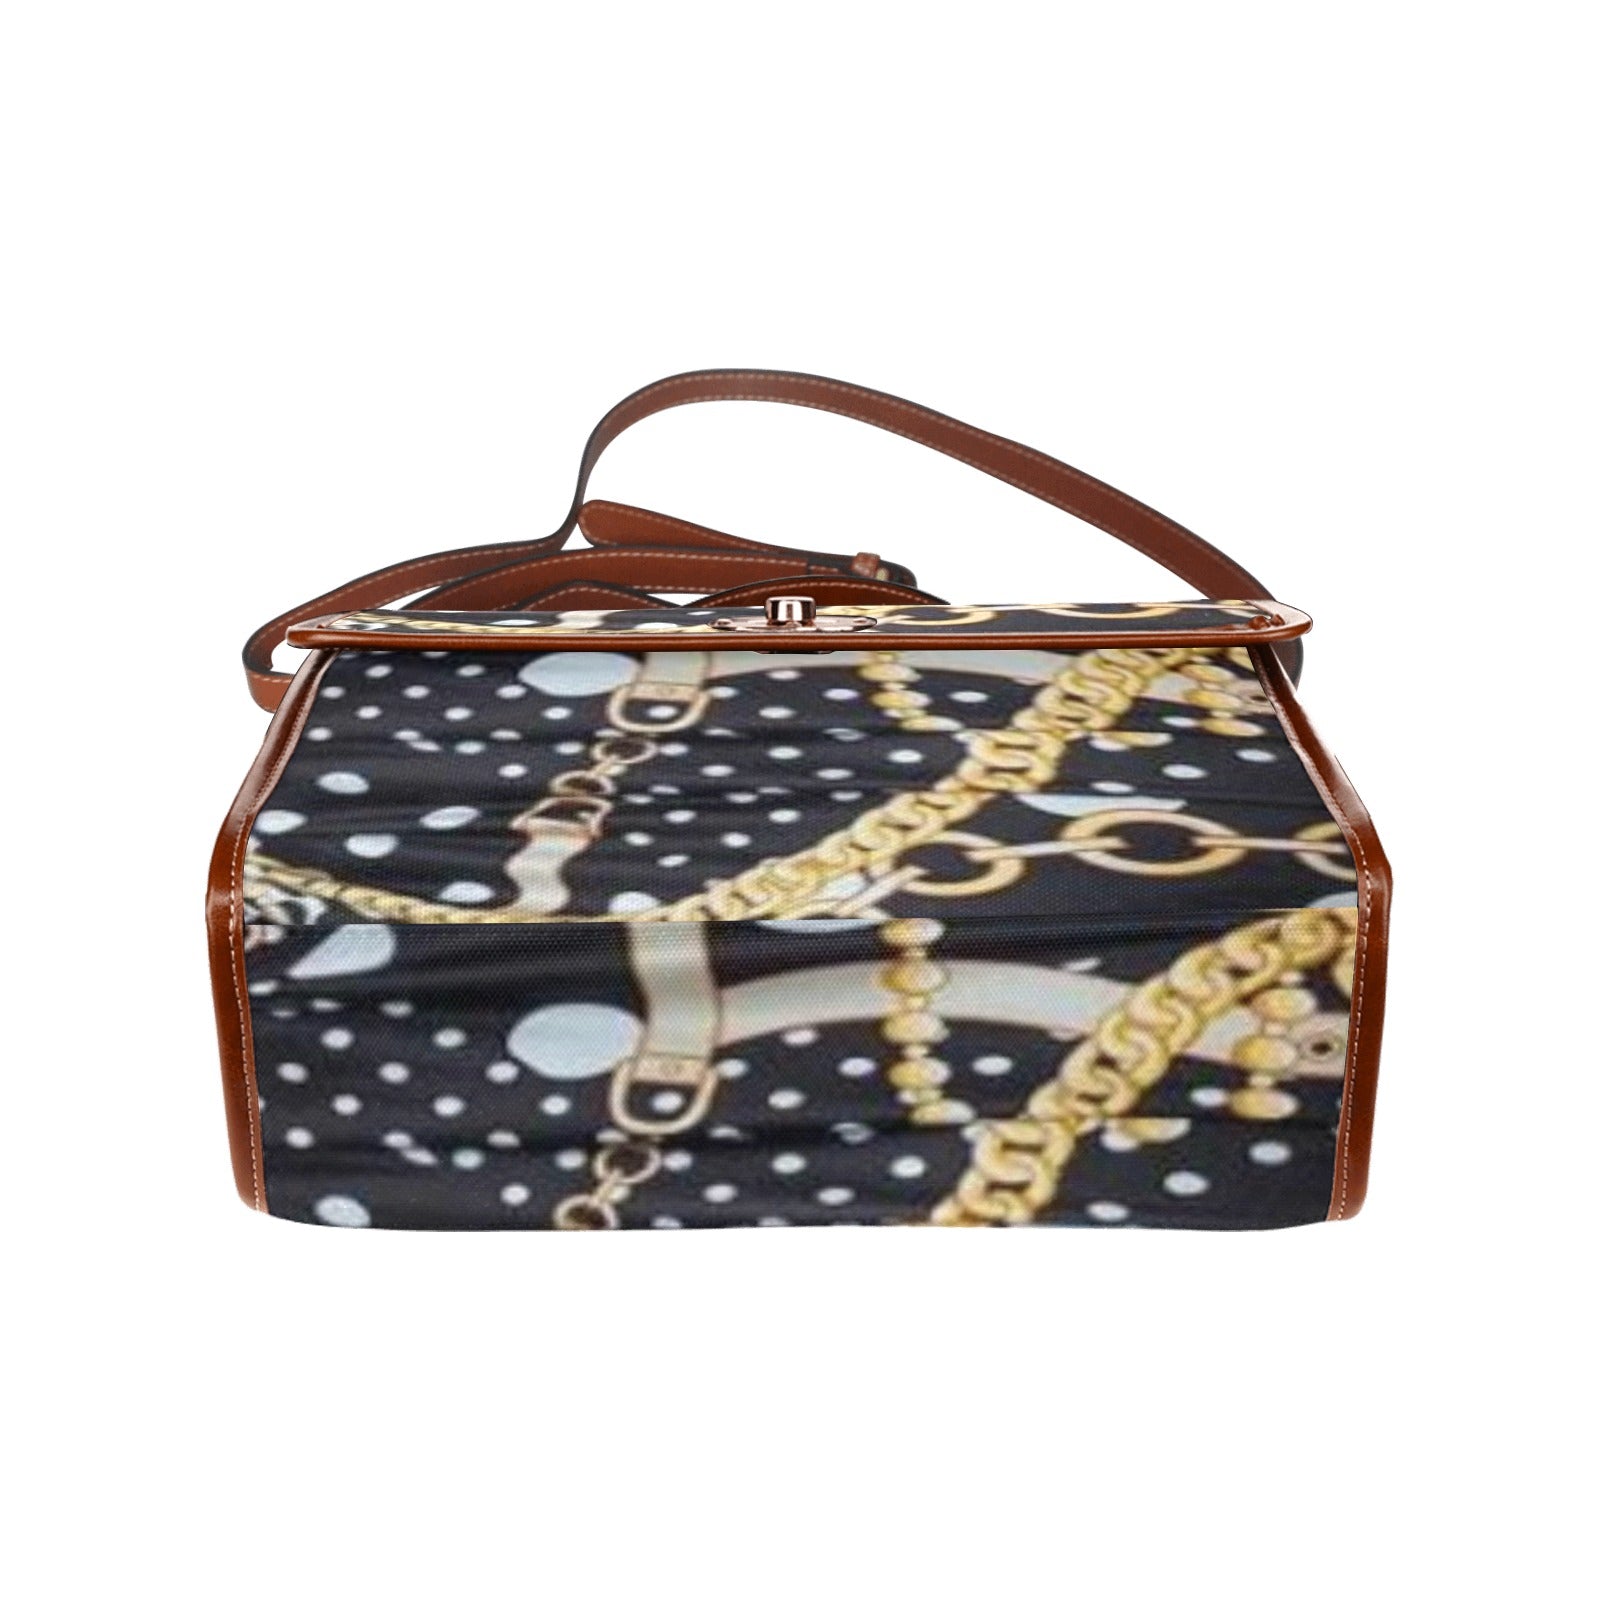 fz chain handbag all over print waterproof canvas bag(model1641)(brown strap)